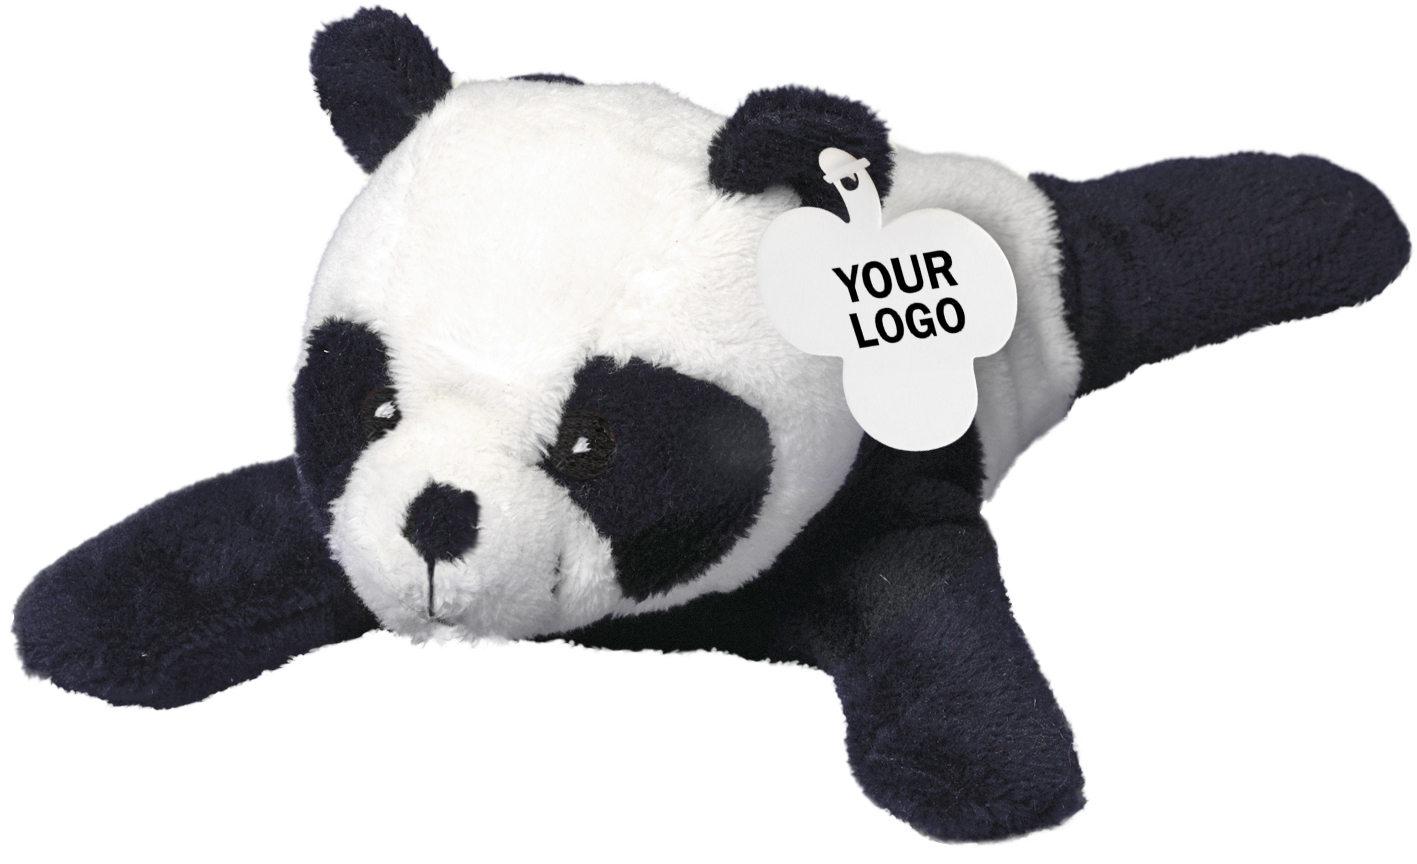 008049 040999999 3d045 frt pro01 fal - Panda soft toy